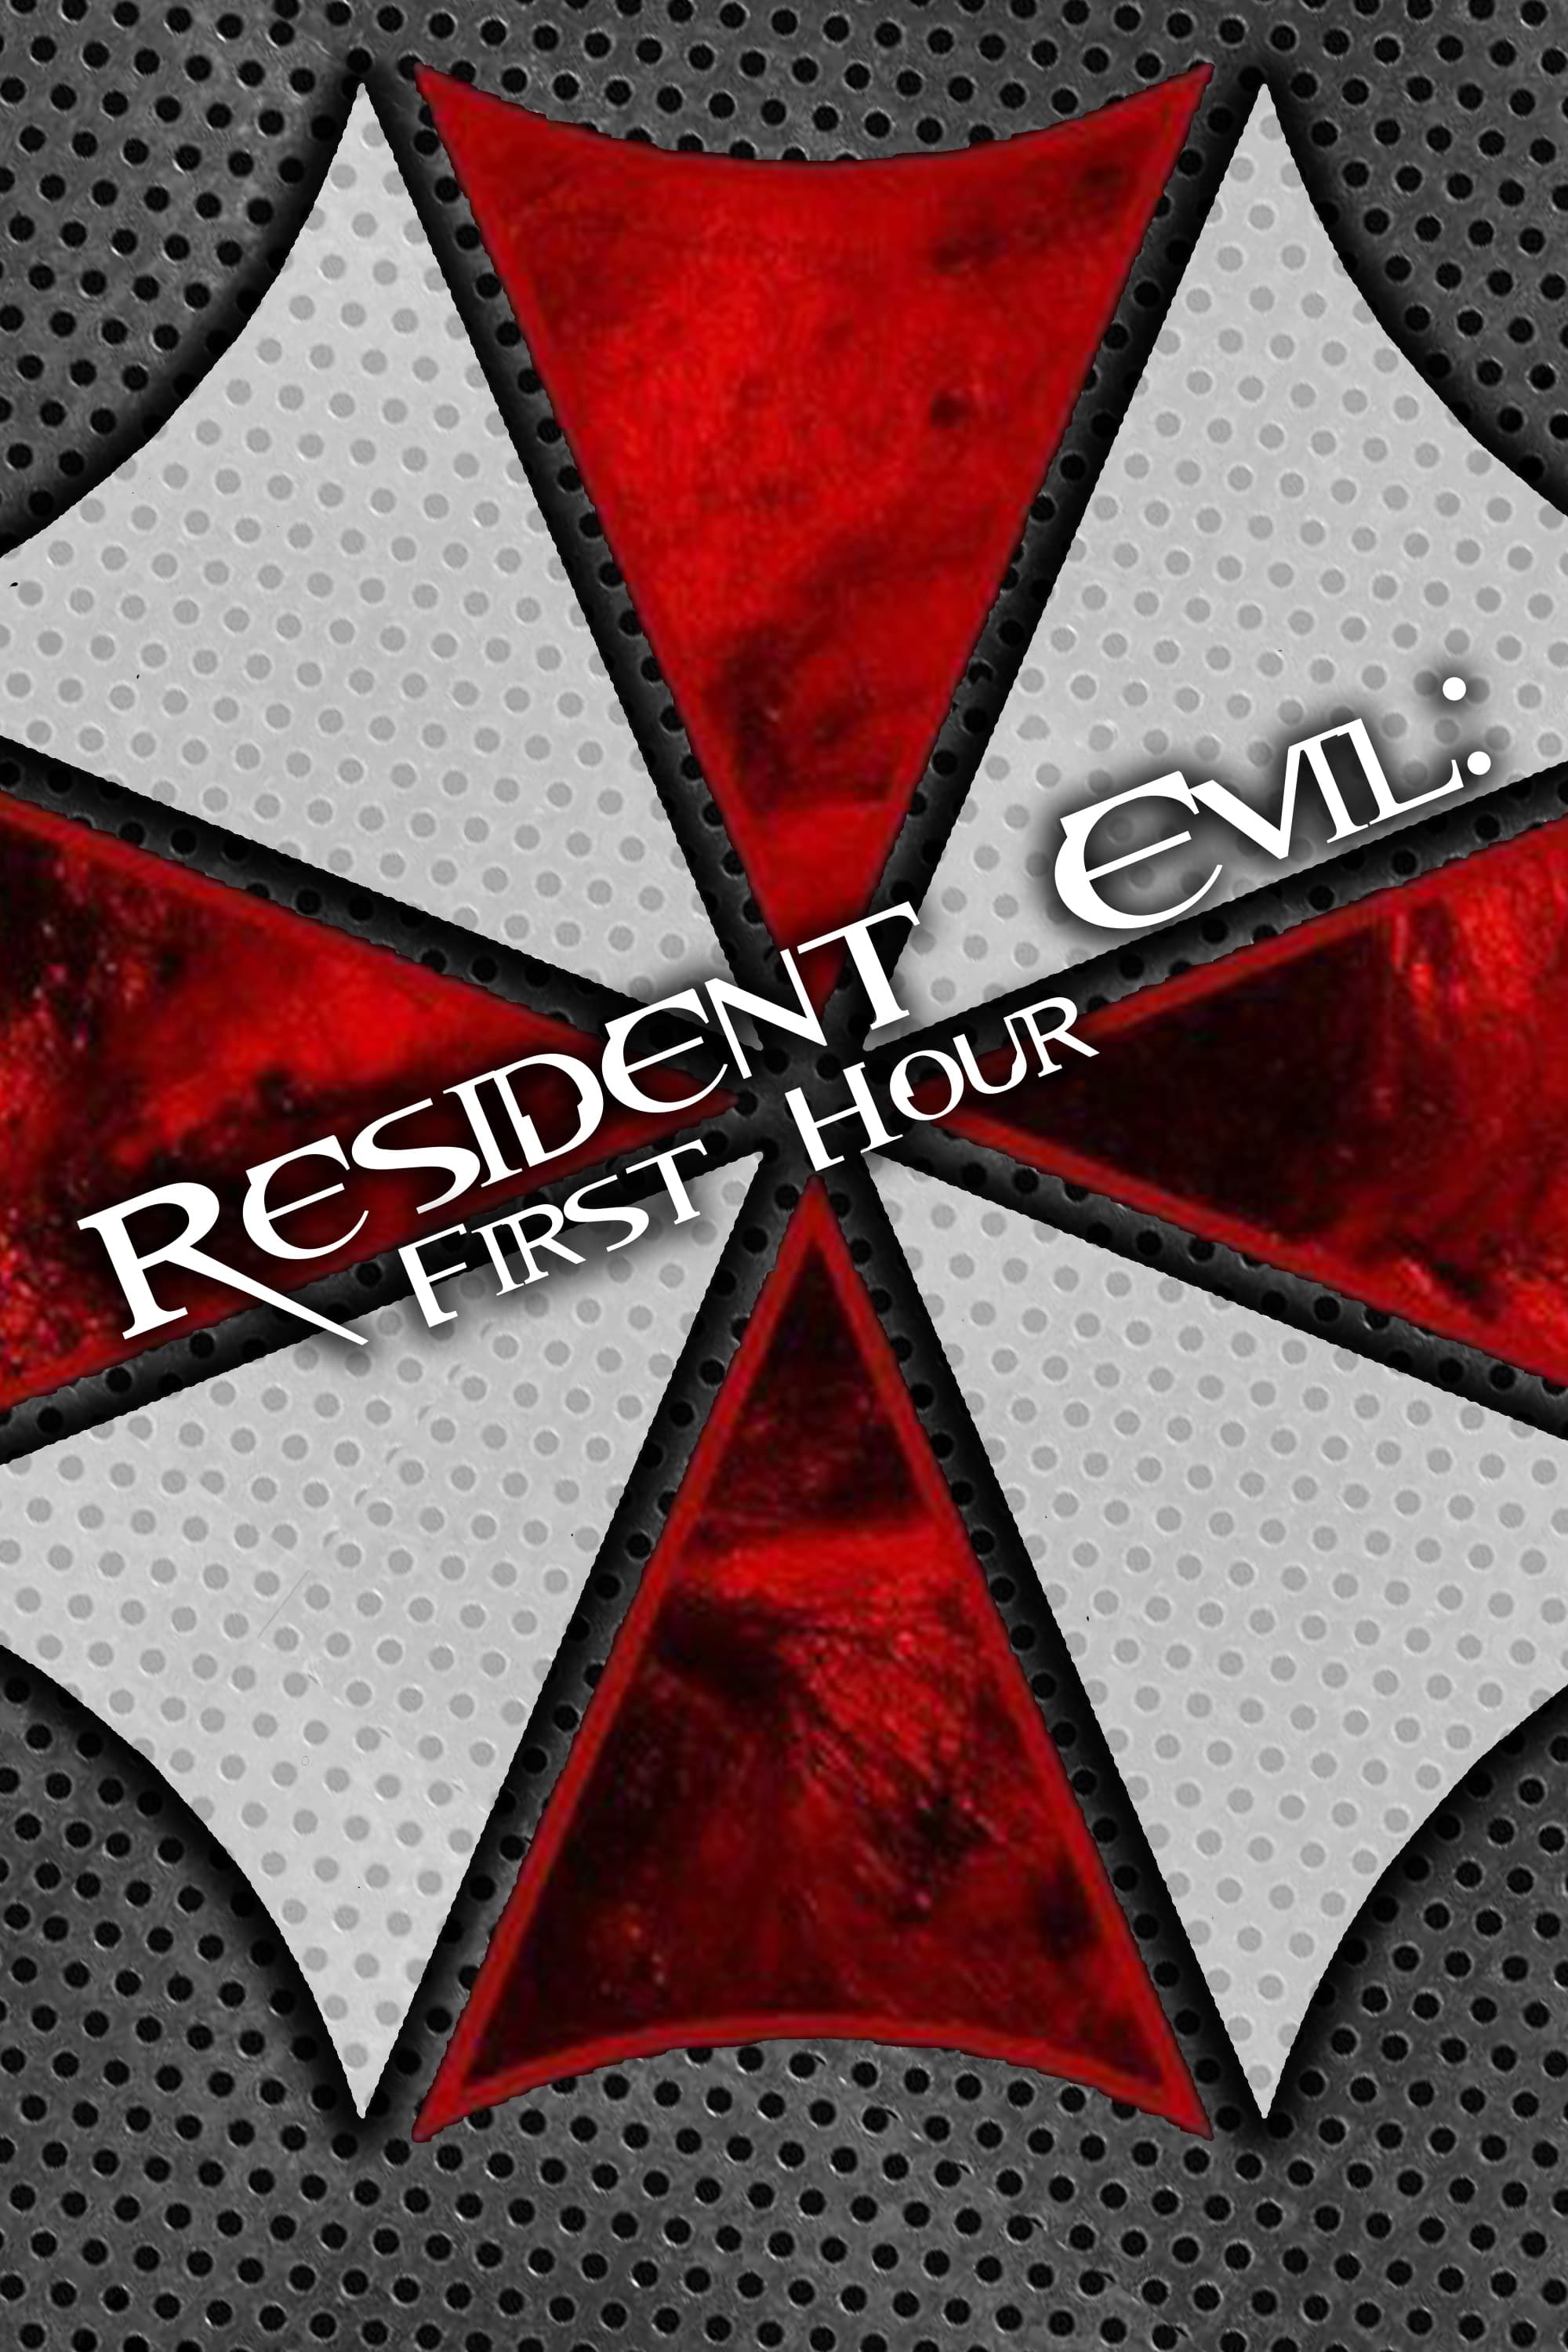 Resident Evil: First Hour (2011) постер